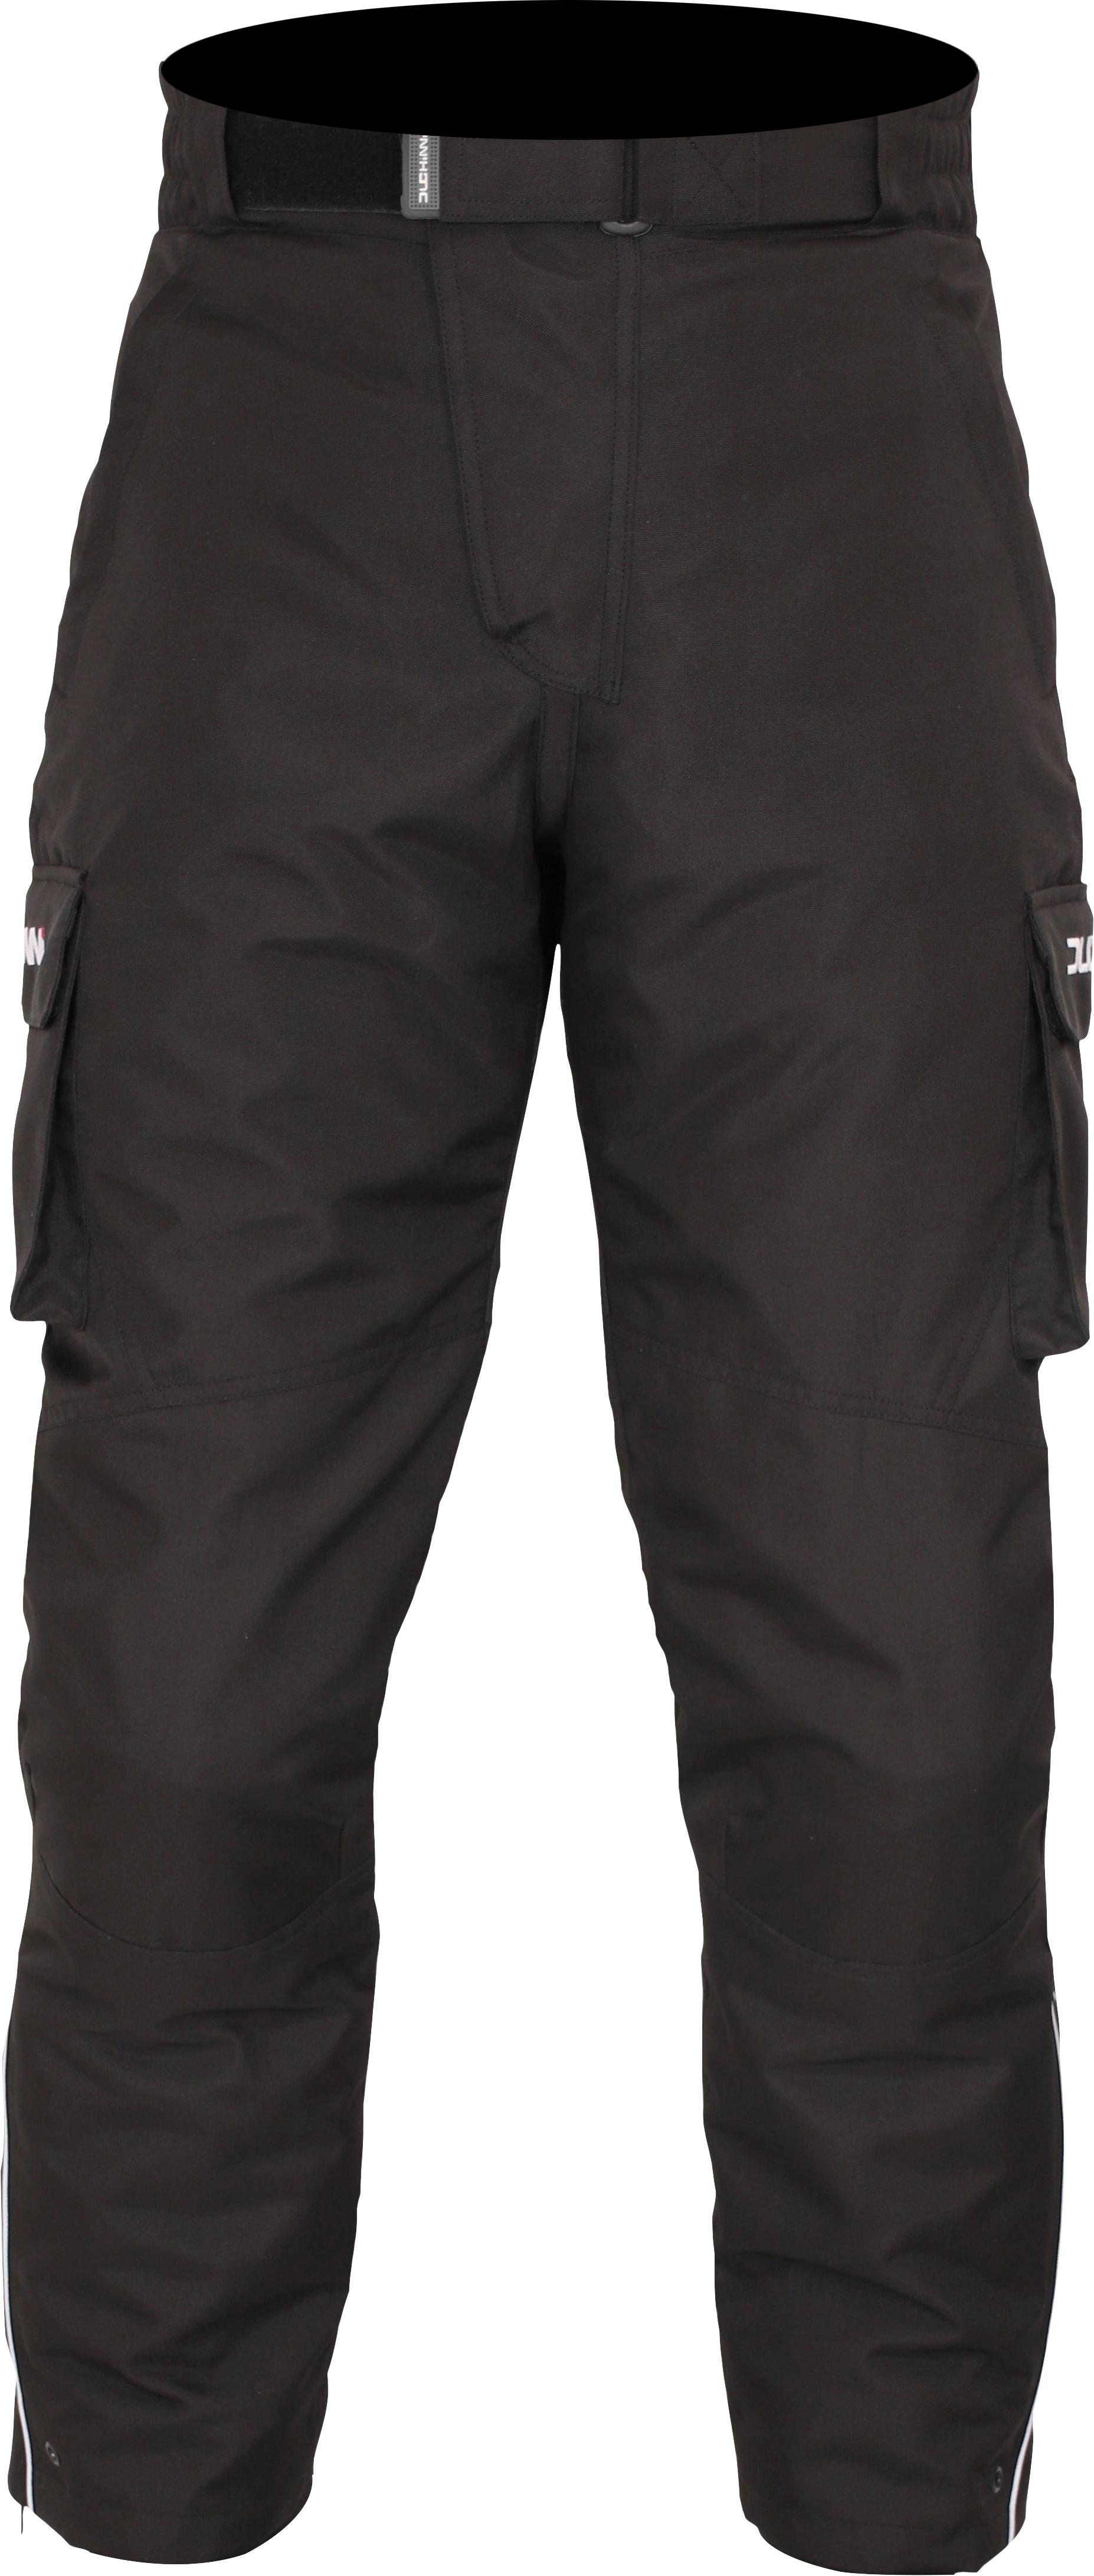 Duchinni Pacific Motorcycle Short Jeans - Black, 2Xl